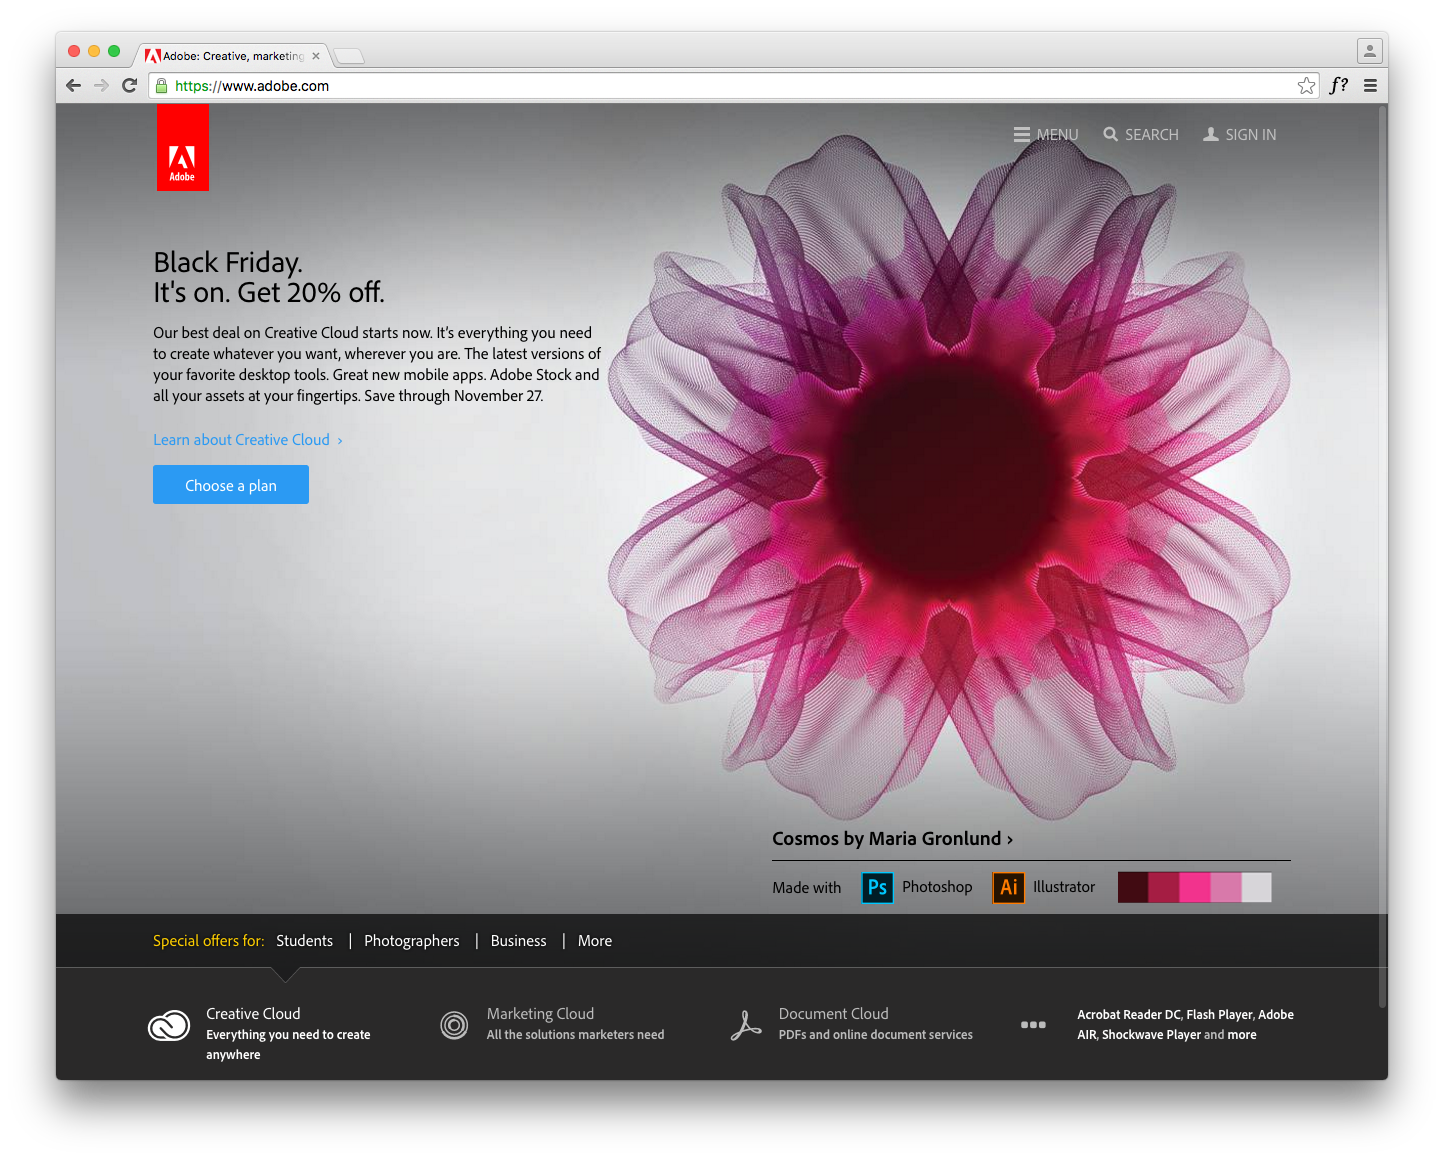 Adobe home website screen grab image for ST8MNT 5 Vices of a Designer blog post